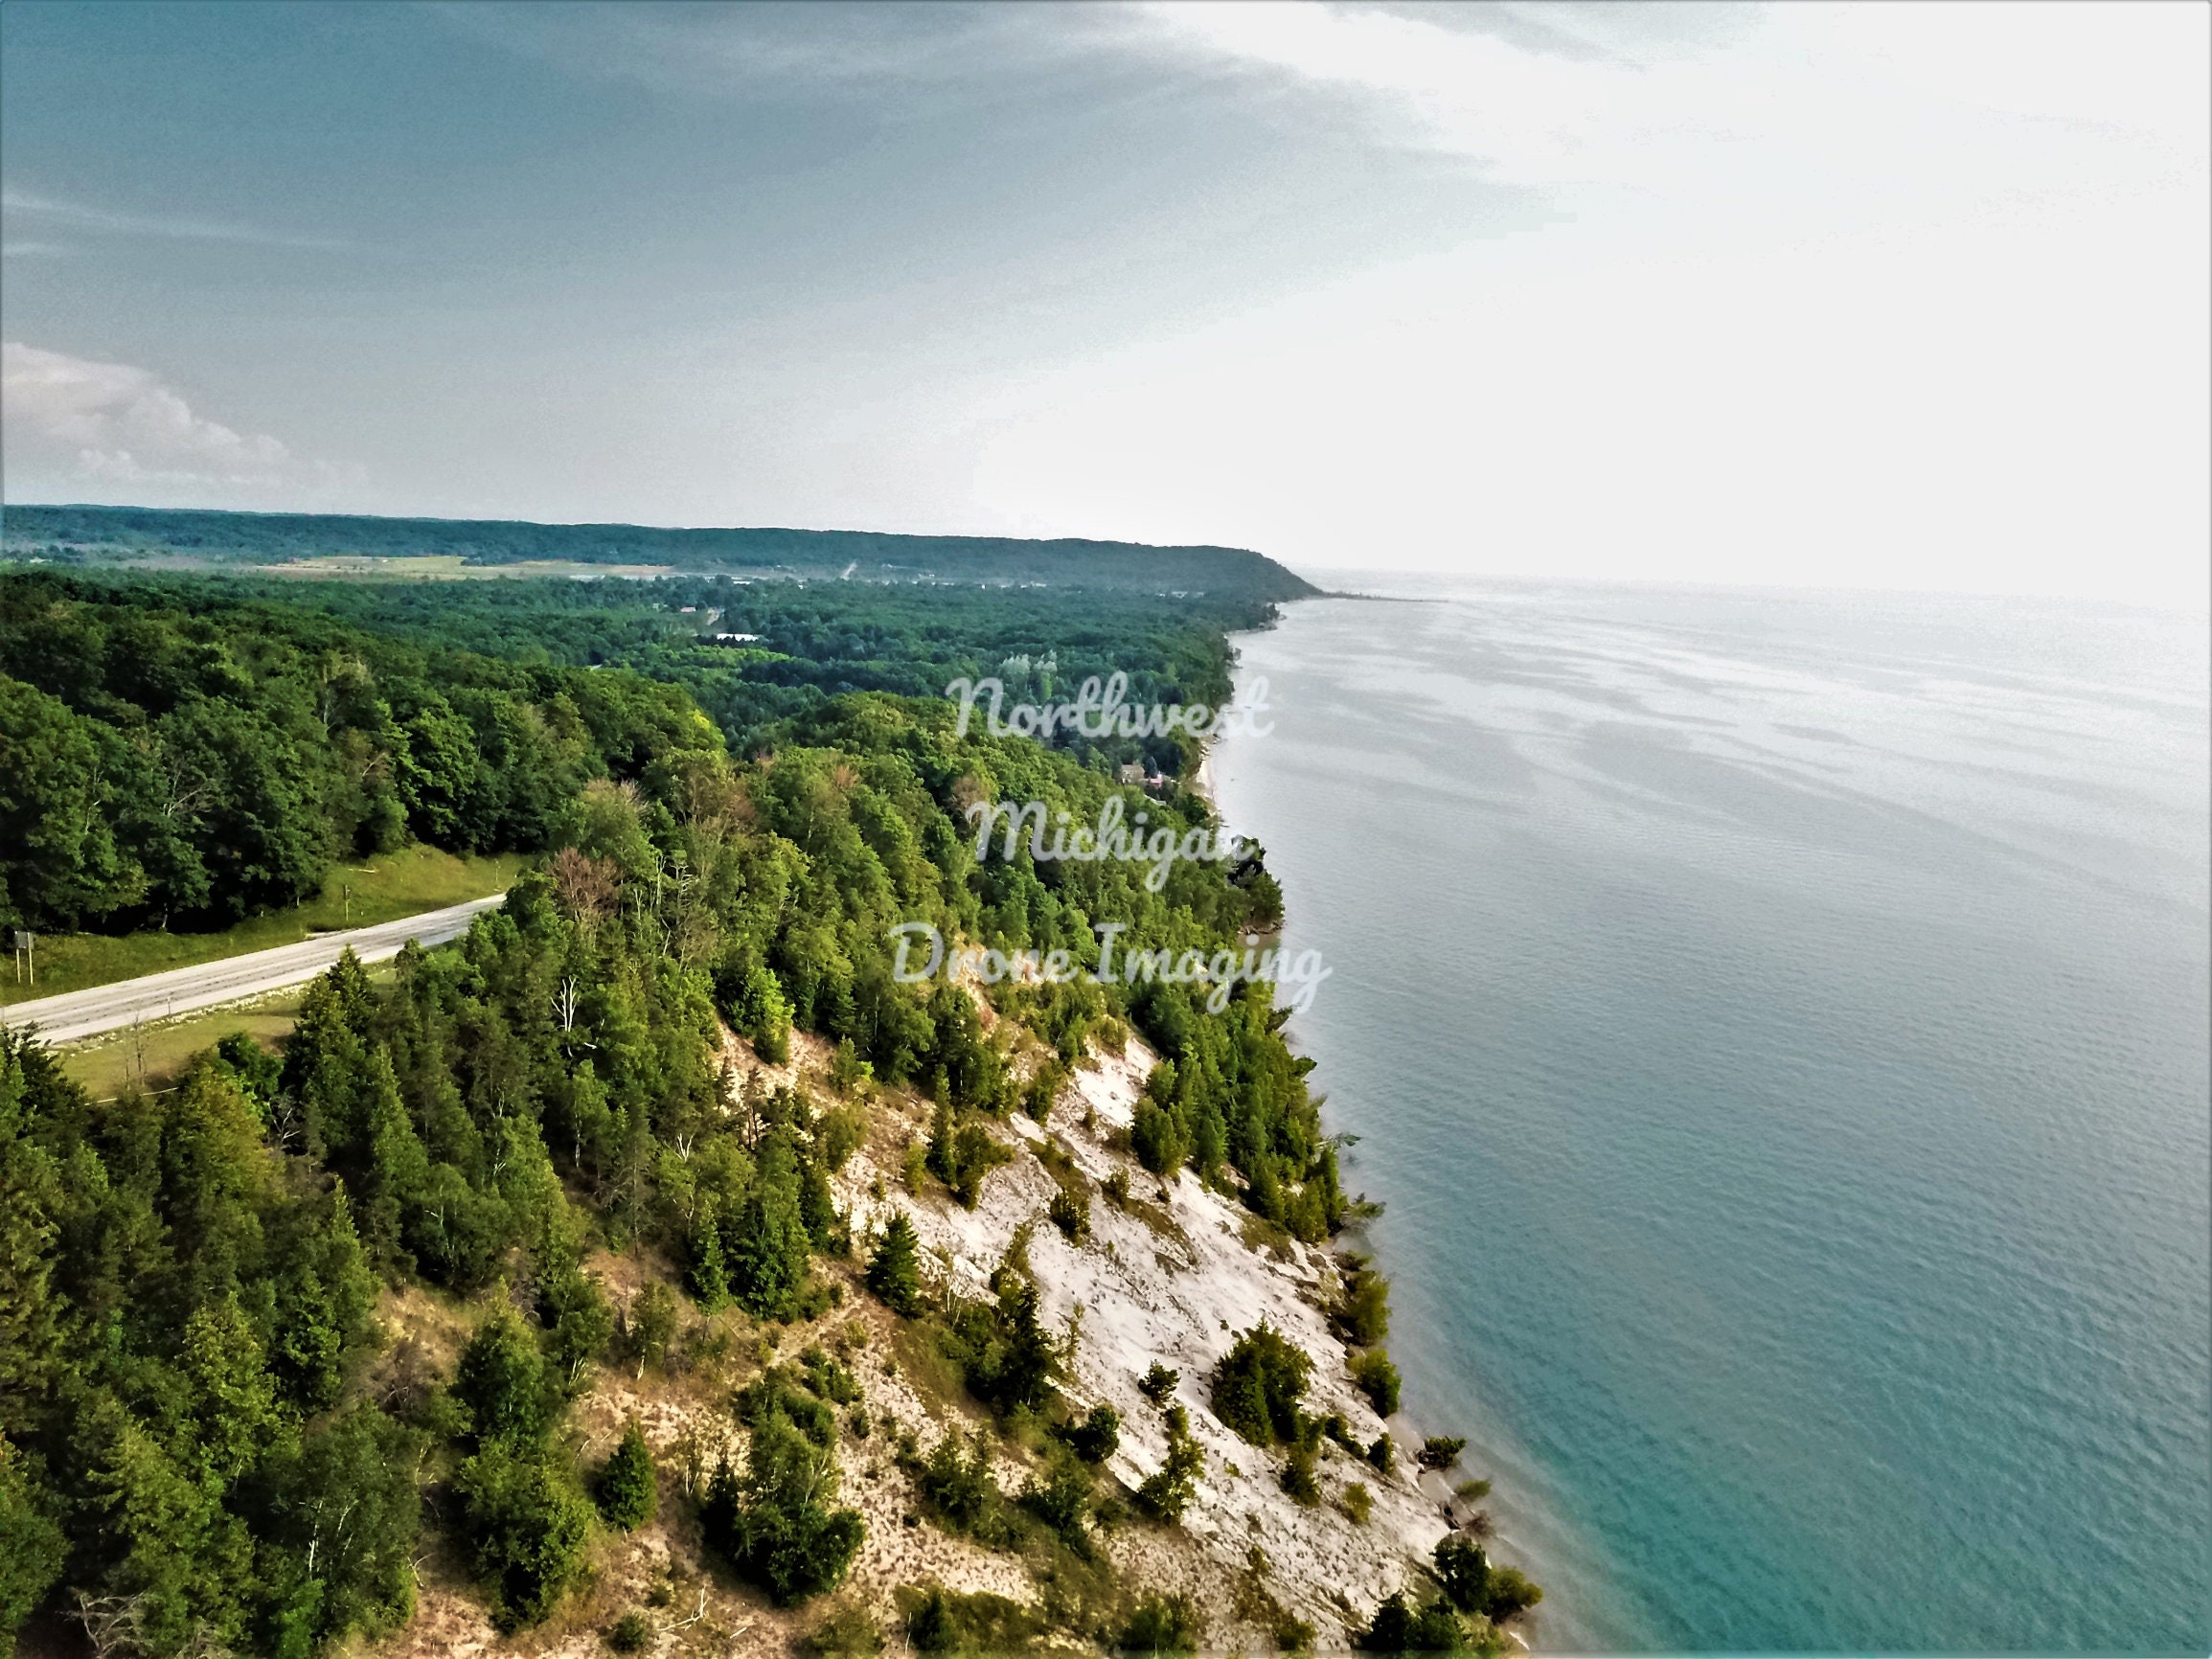 Danmark Tilsætningsstof intelligens Northwest Michigan Drone Imaging Inspiration Point Arcadia - Etsy